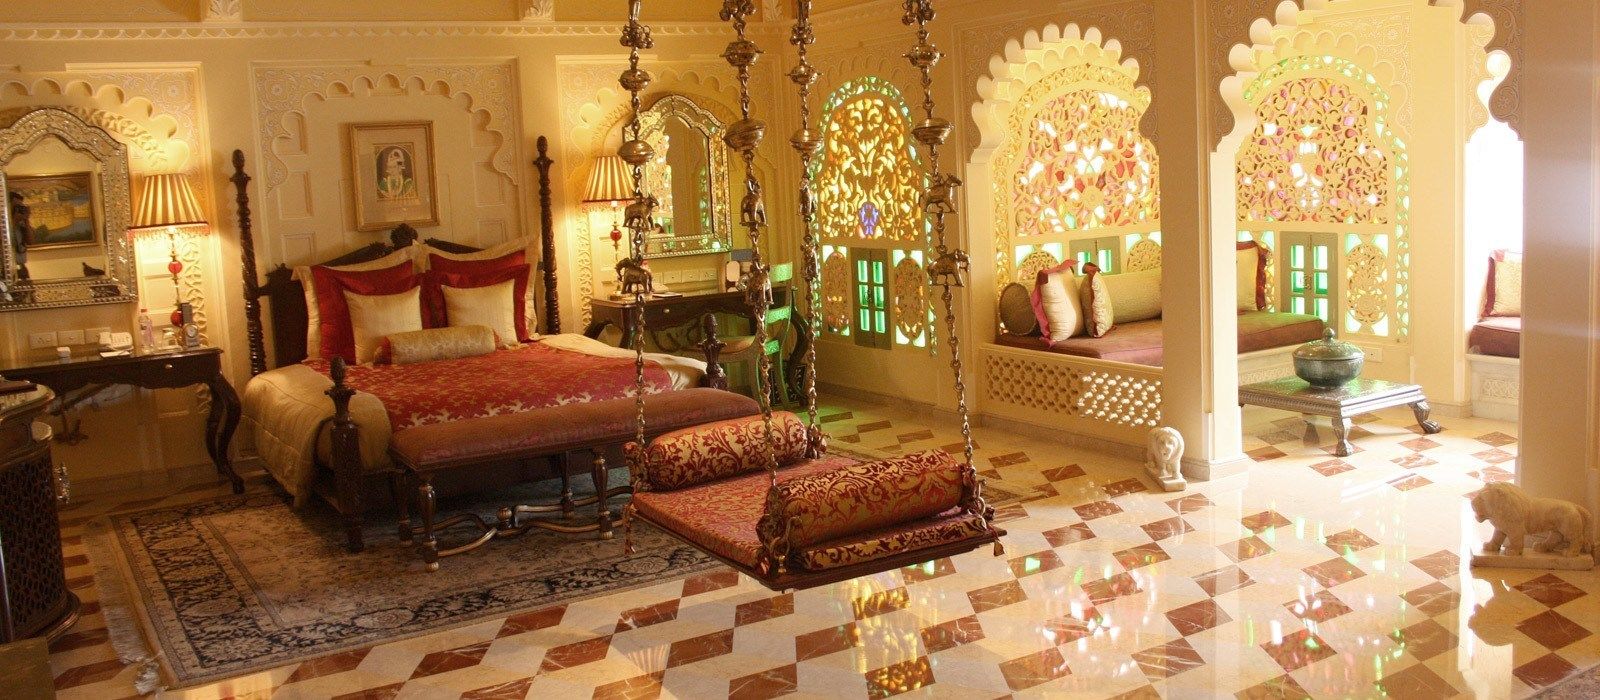 Temple room. Taj Lake Palace спа зона. Indian Palace inside. Indian Palace Suite Royal. Belgian Palace Bedrooms.